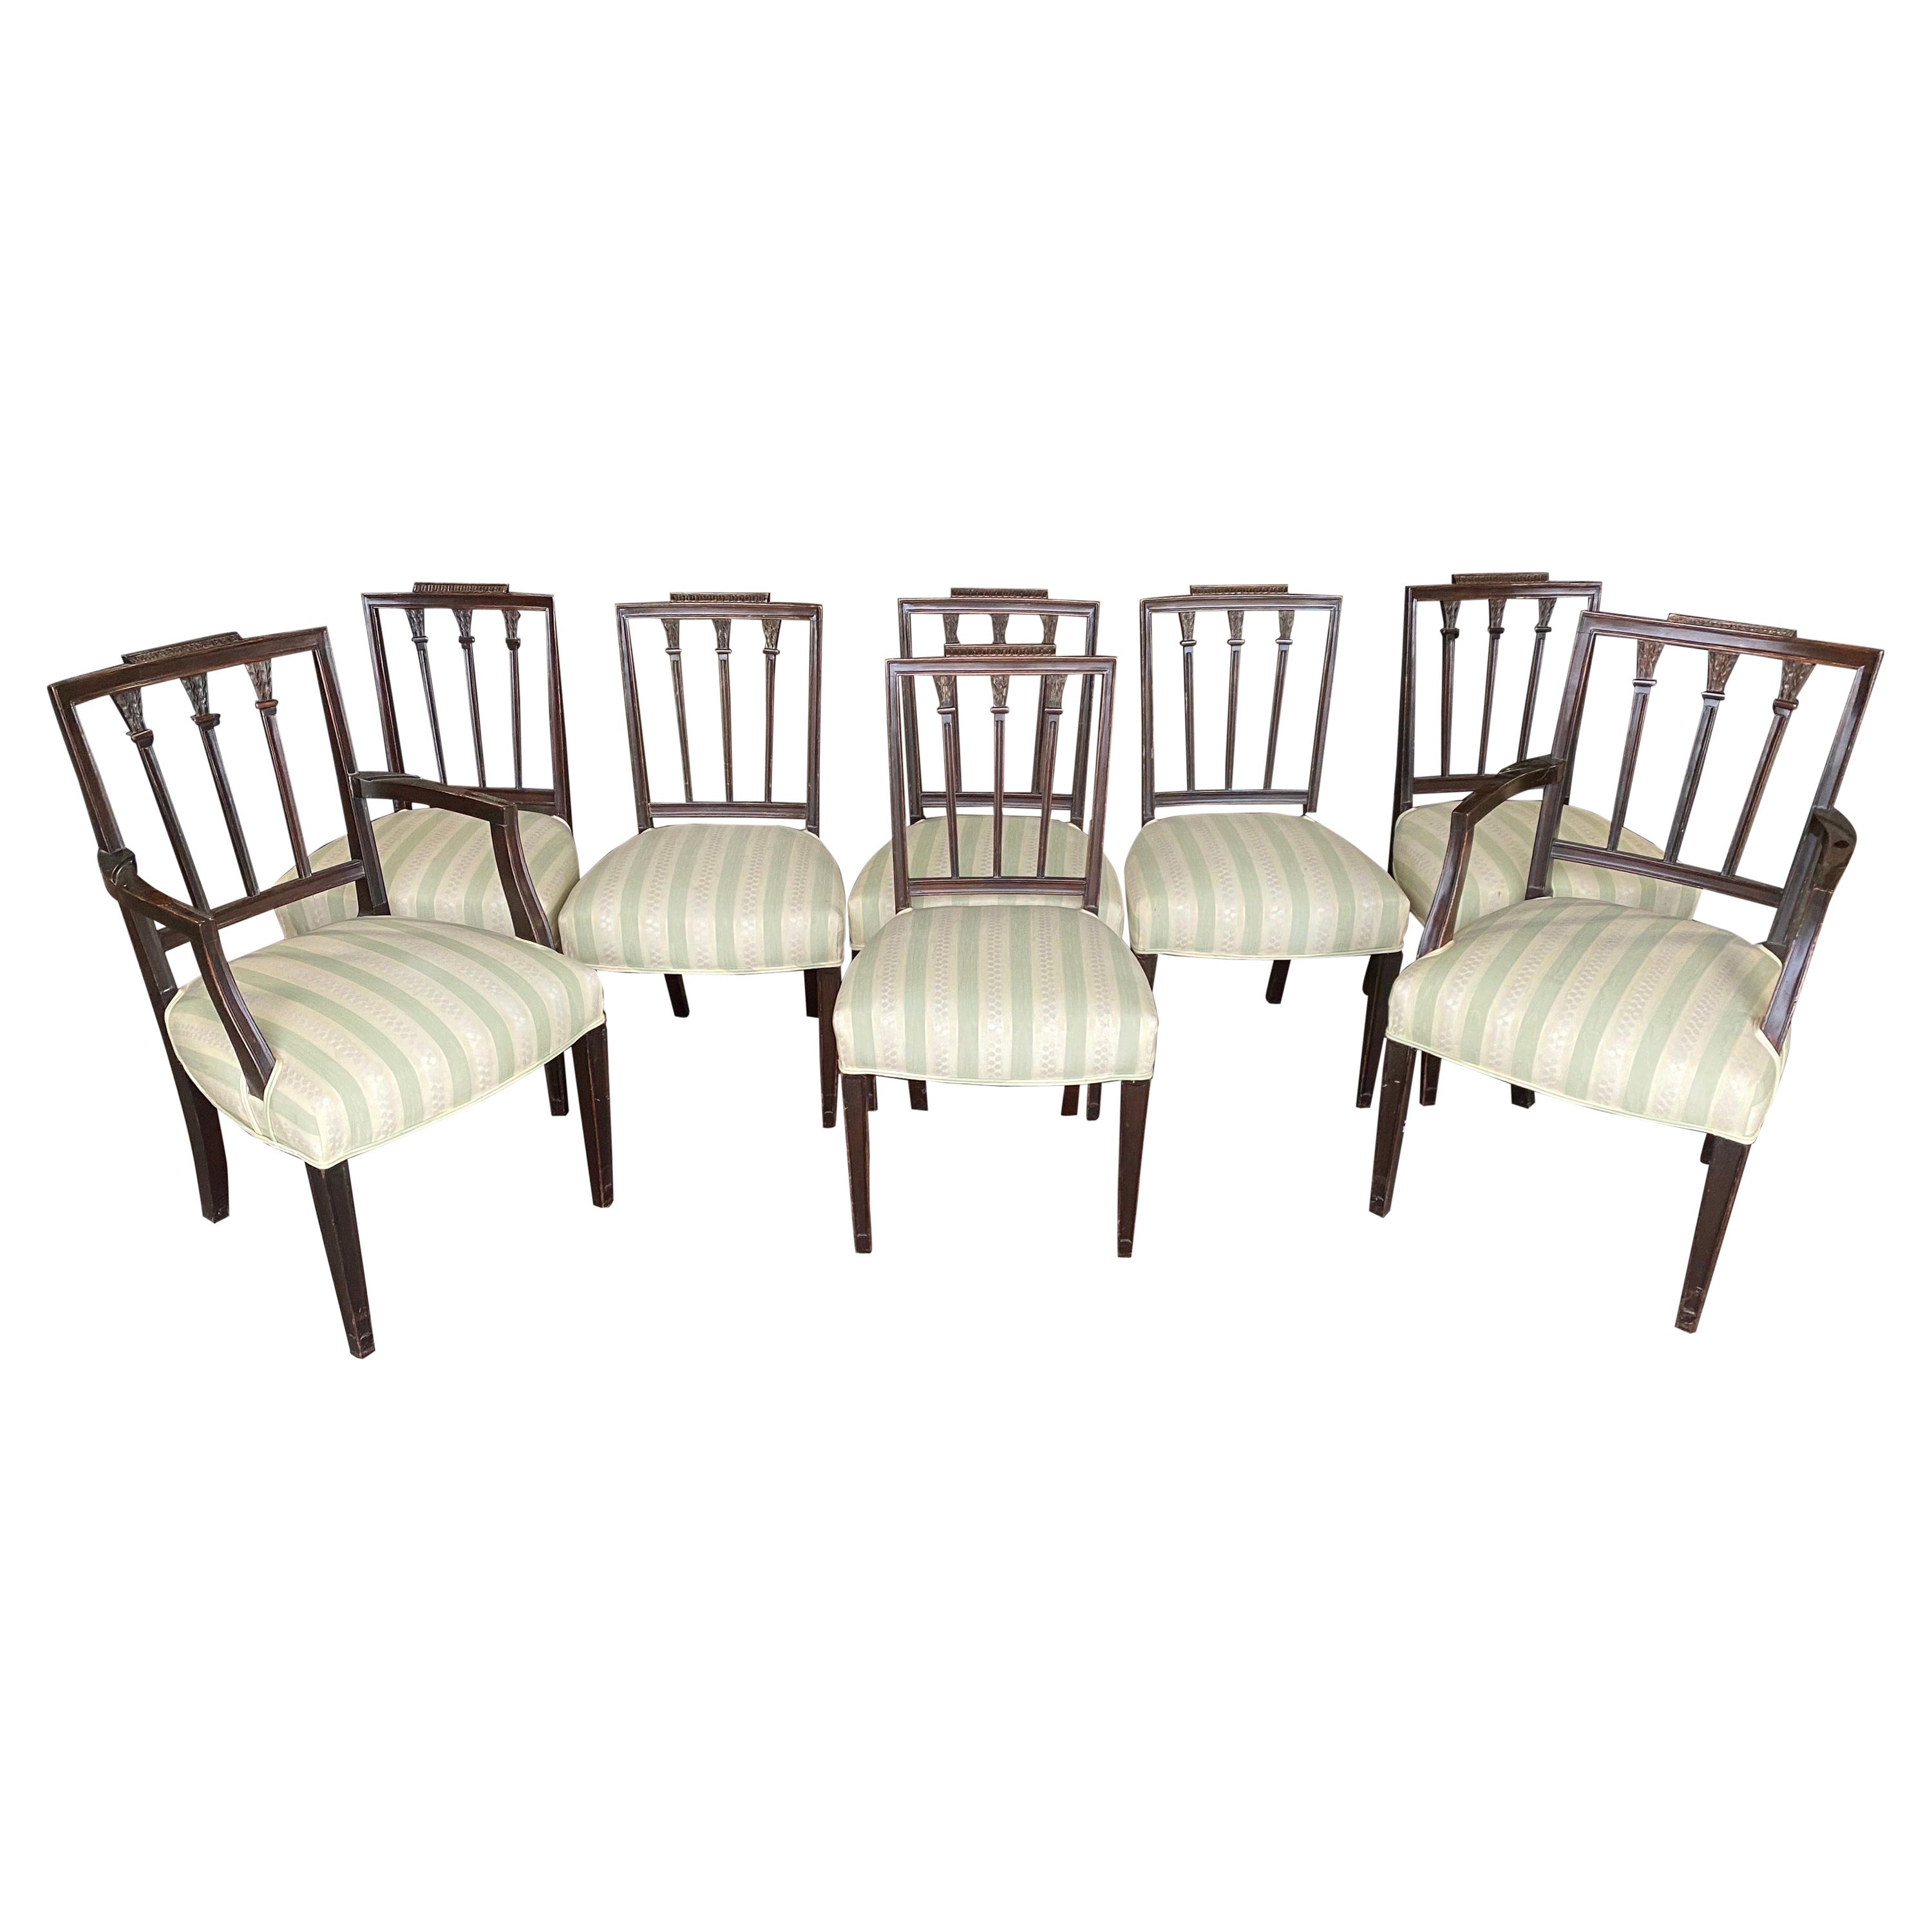 Set of 8 19th Century English Mahogany Dining Chairs